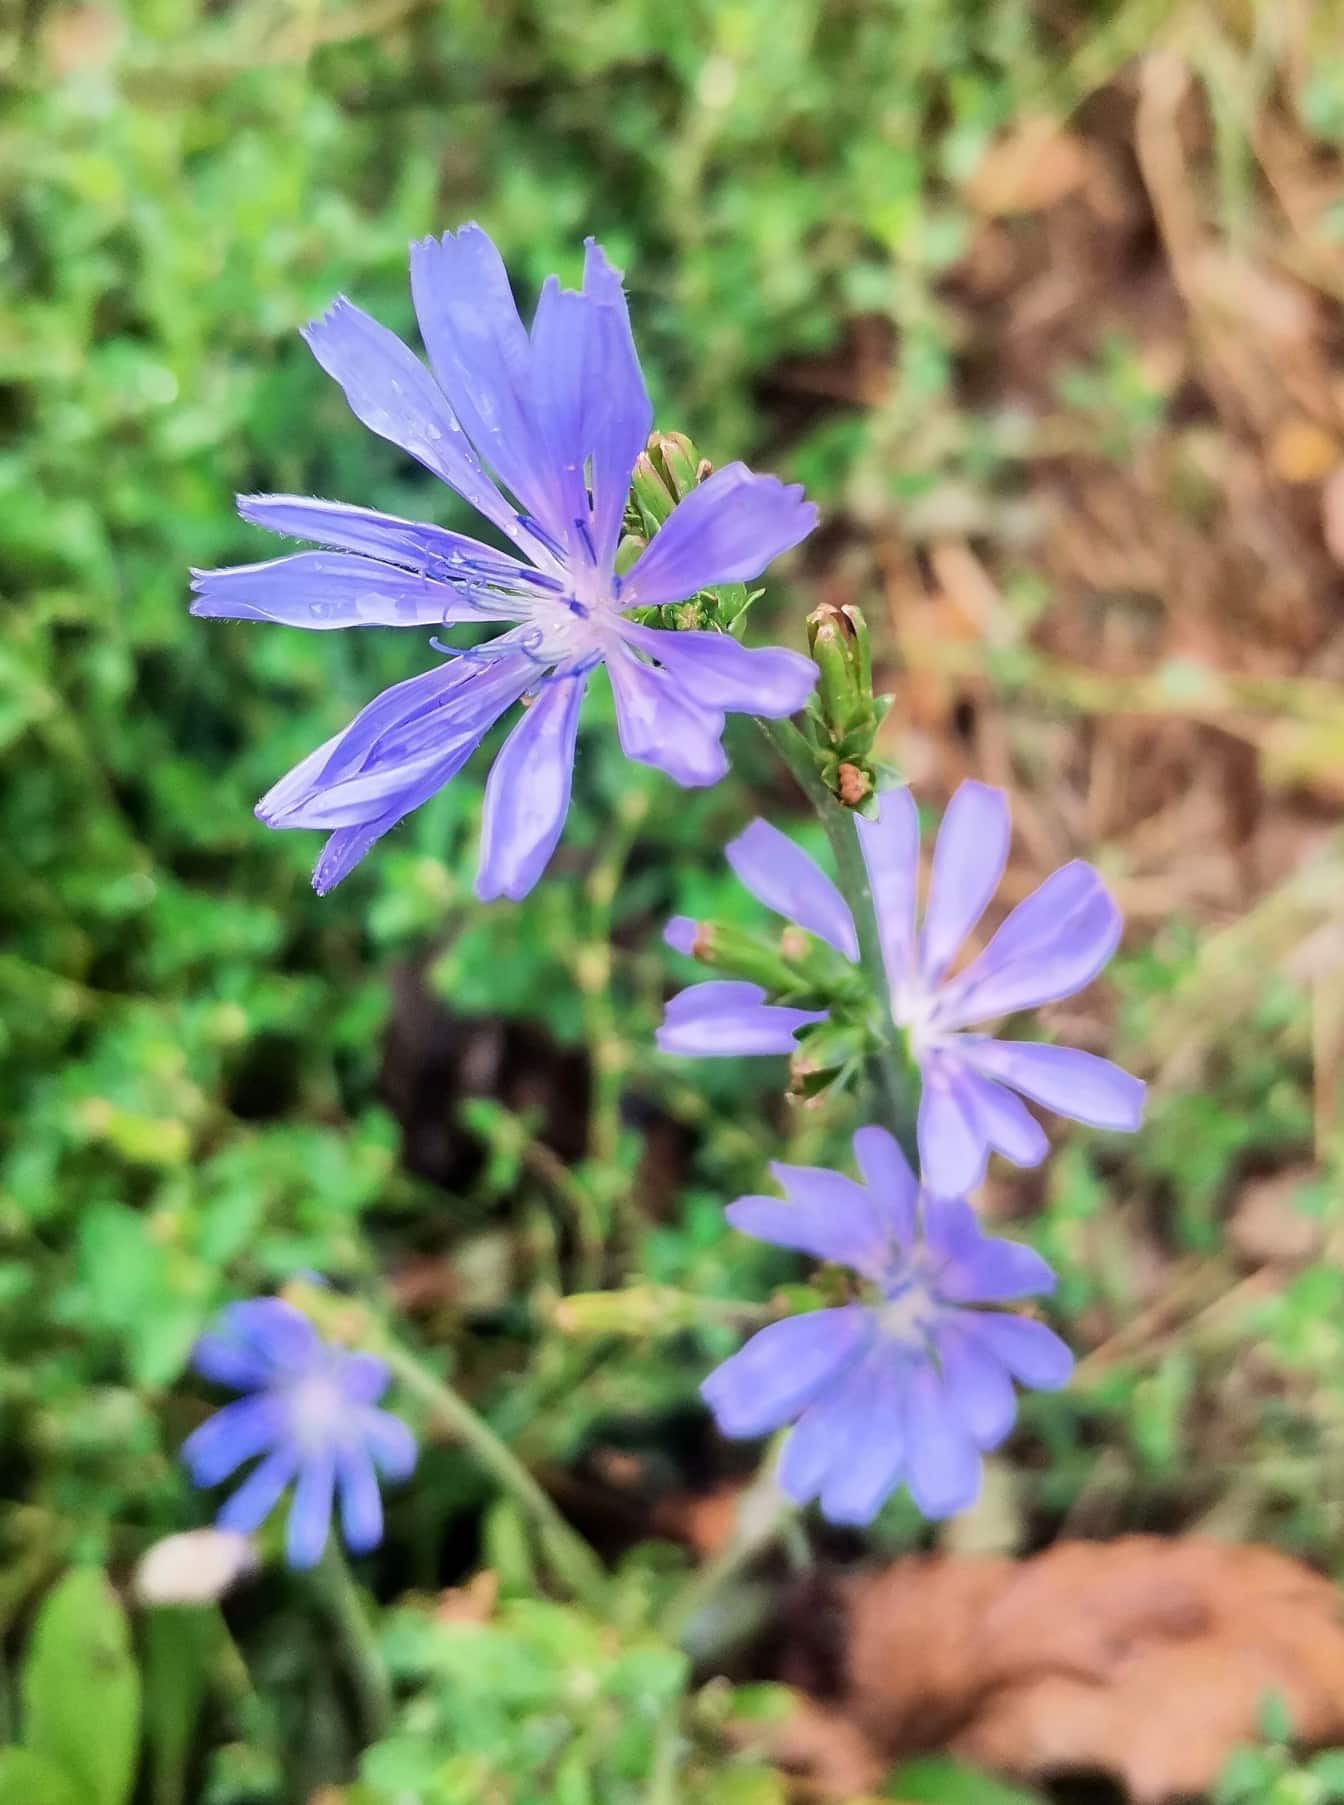 Flores silvestres de achicoria (Cichorium intybus) con pétalos azules brillantes en primer plano